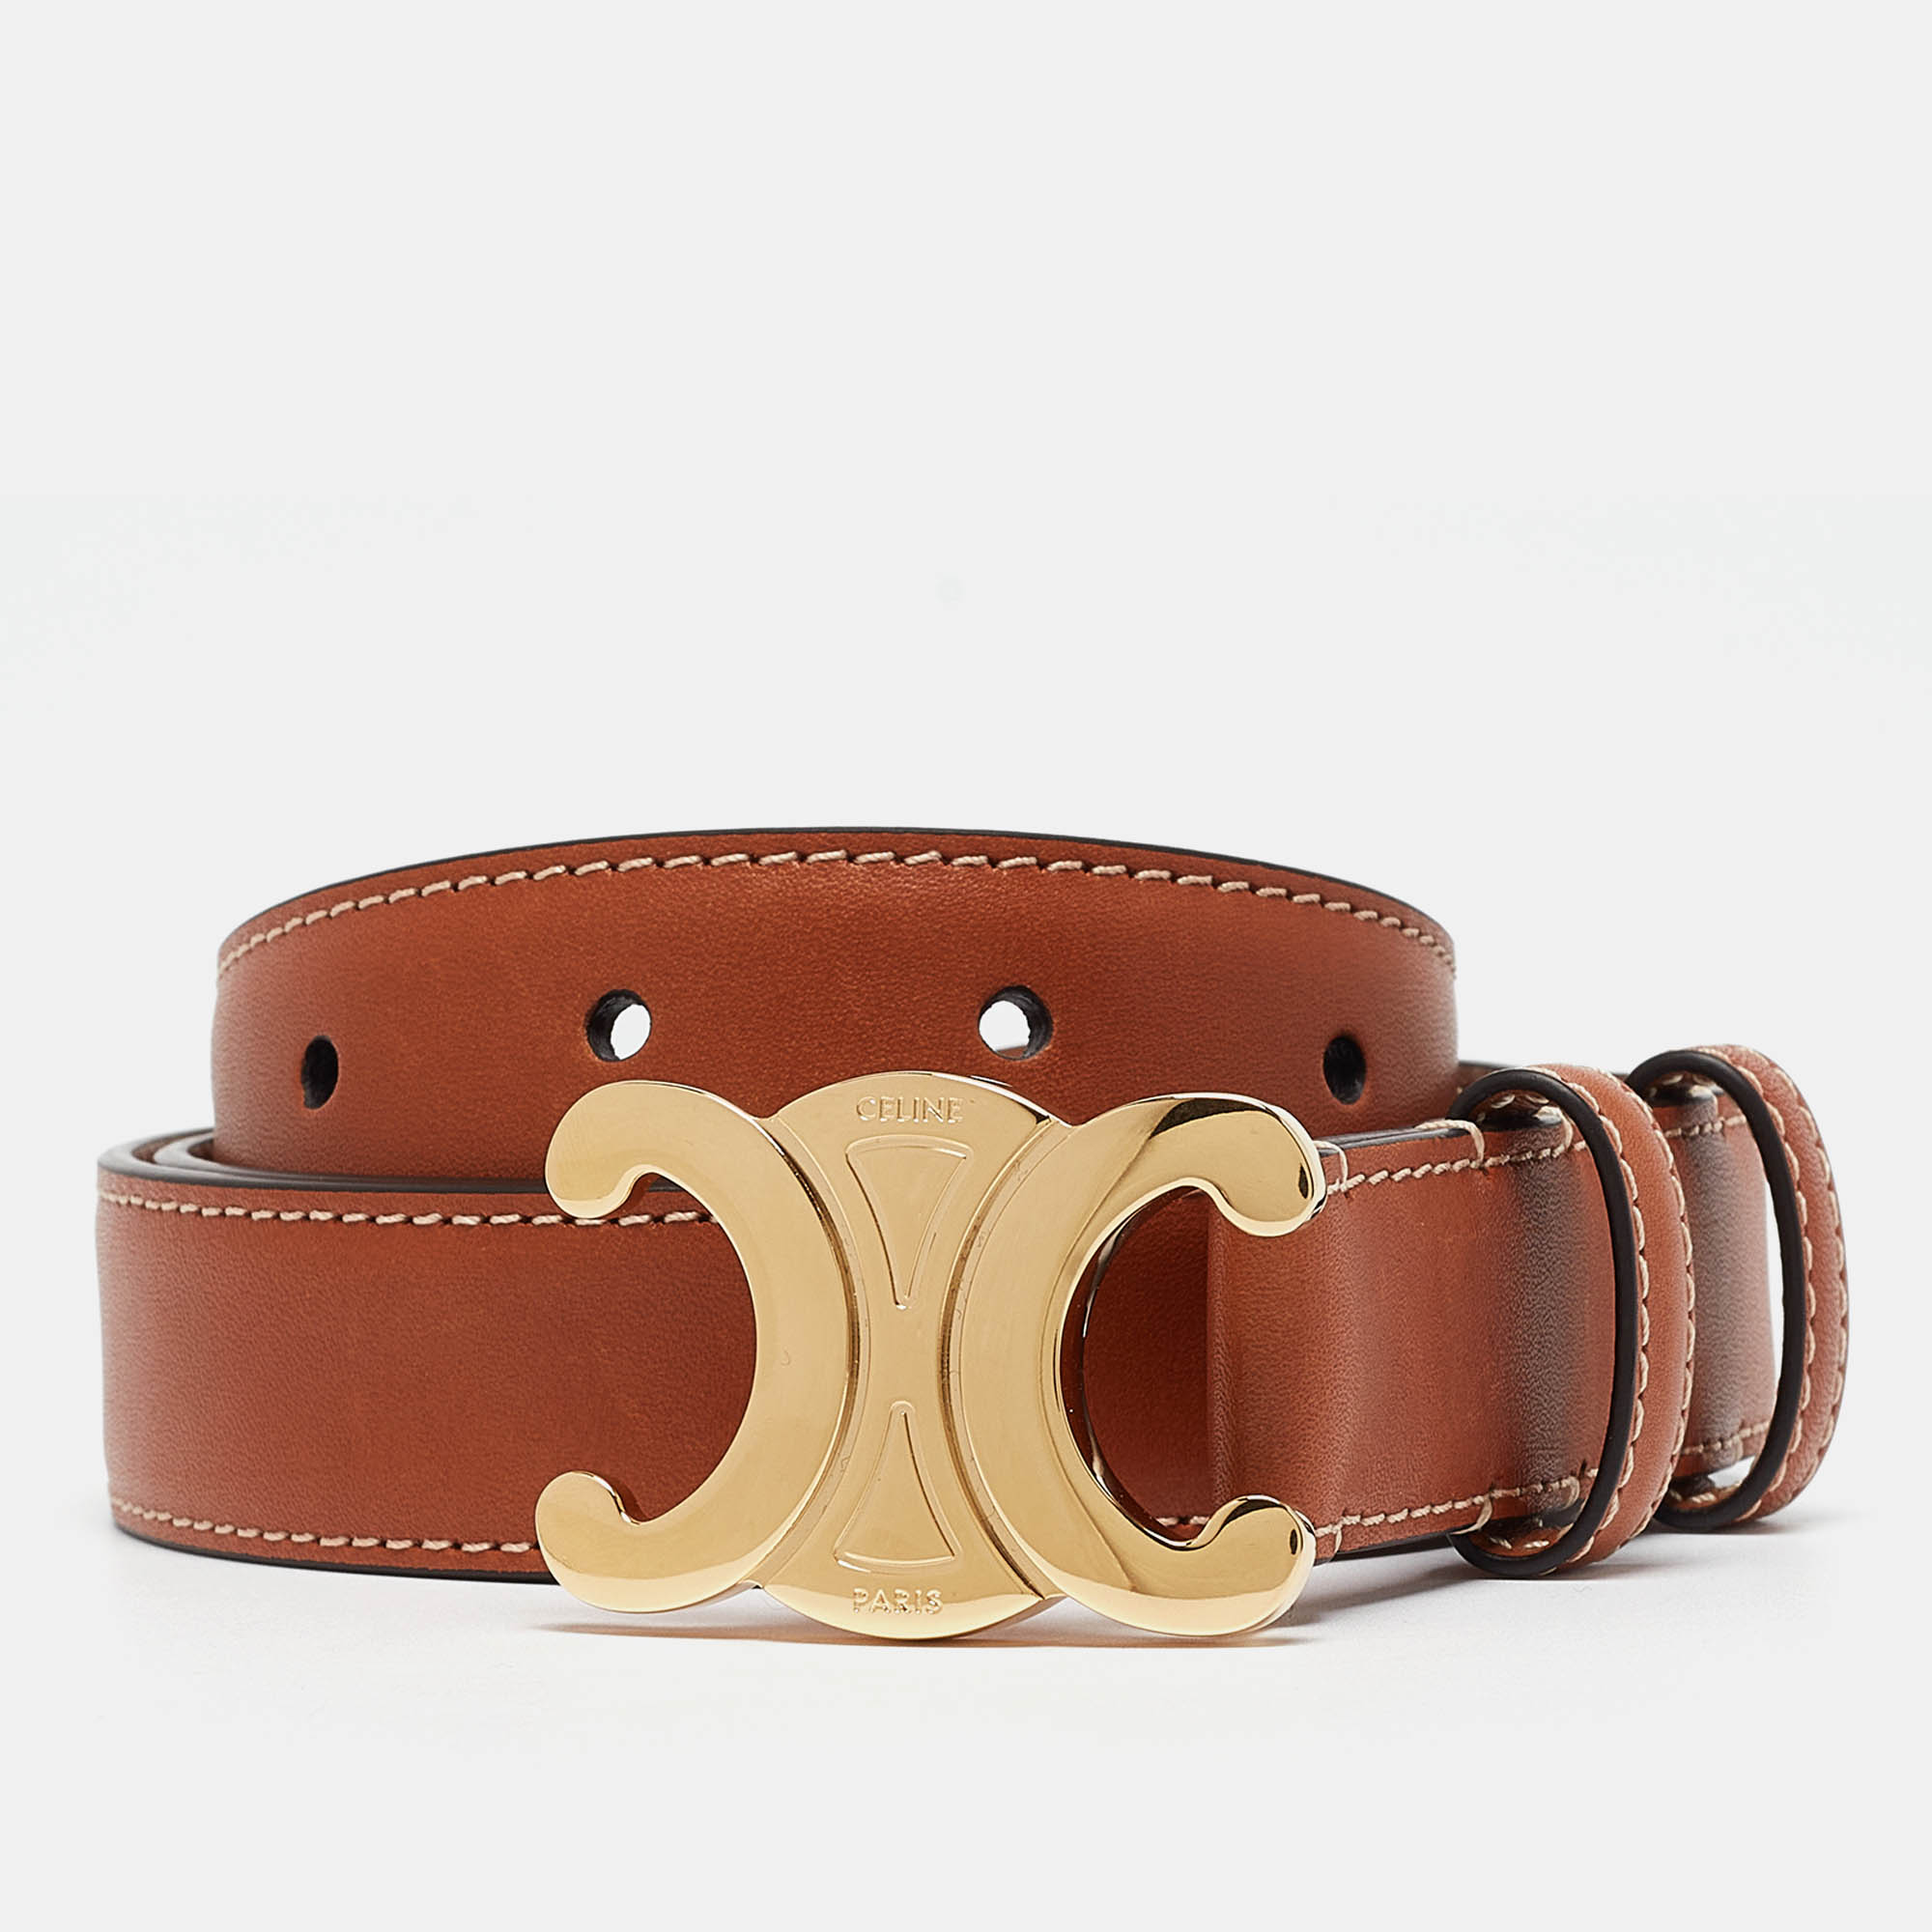 Celine brown leather macadam buckle belt 90cm